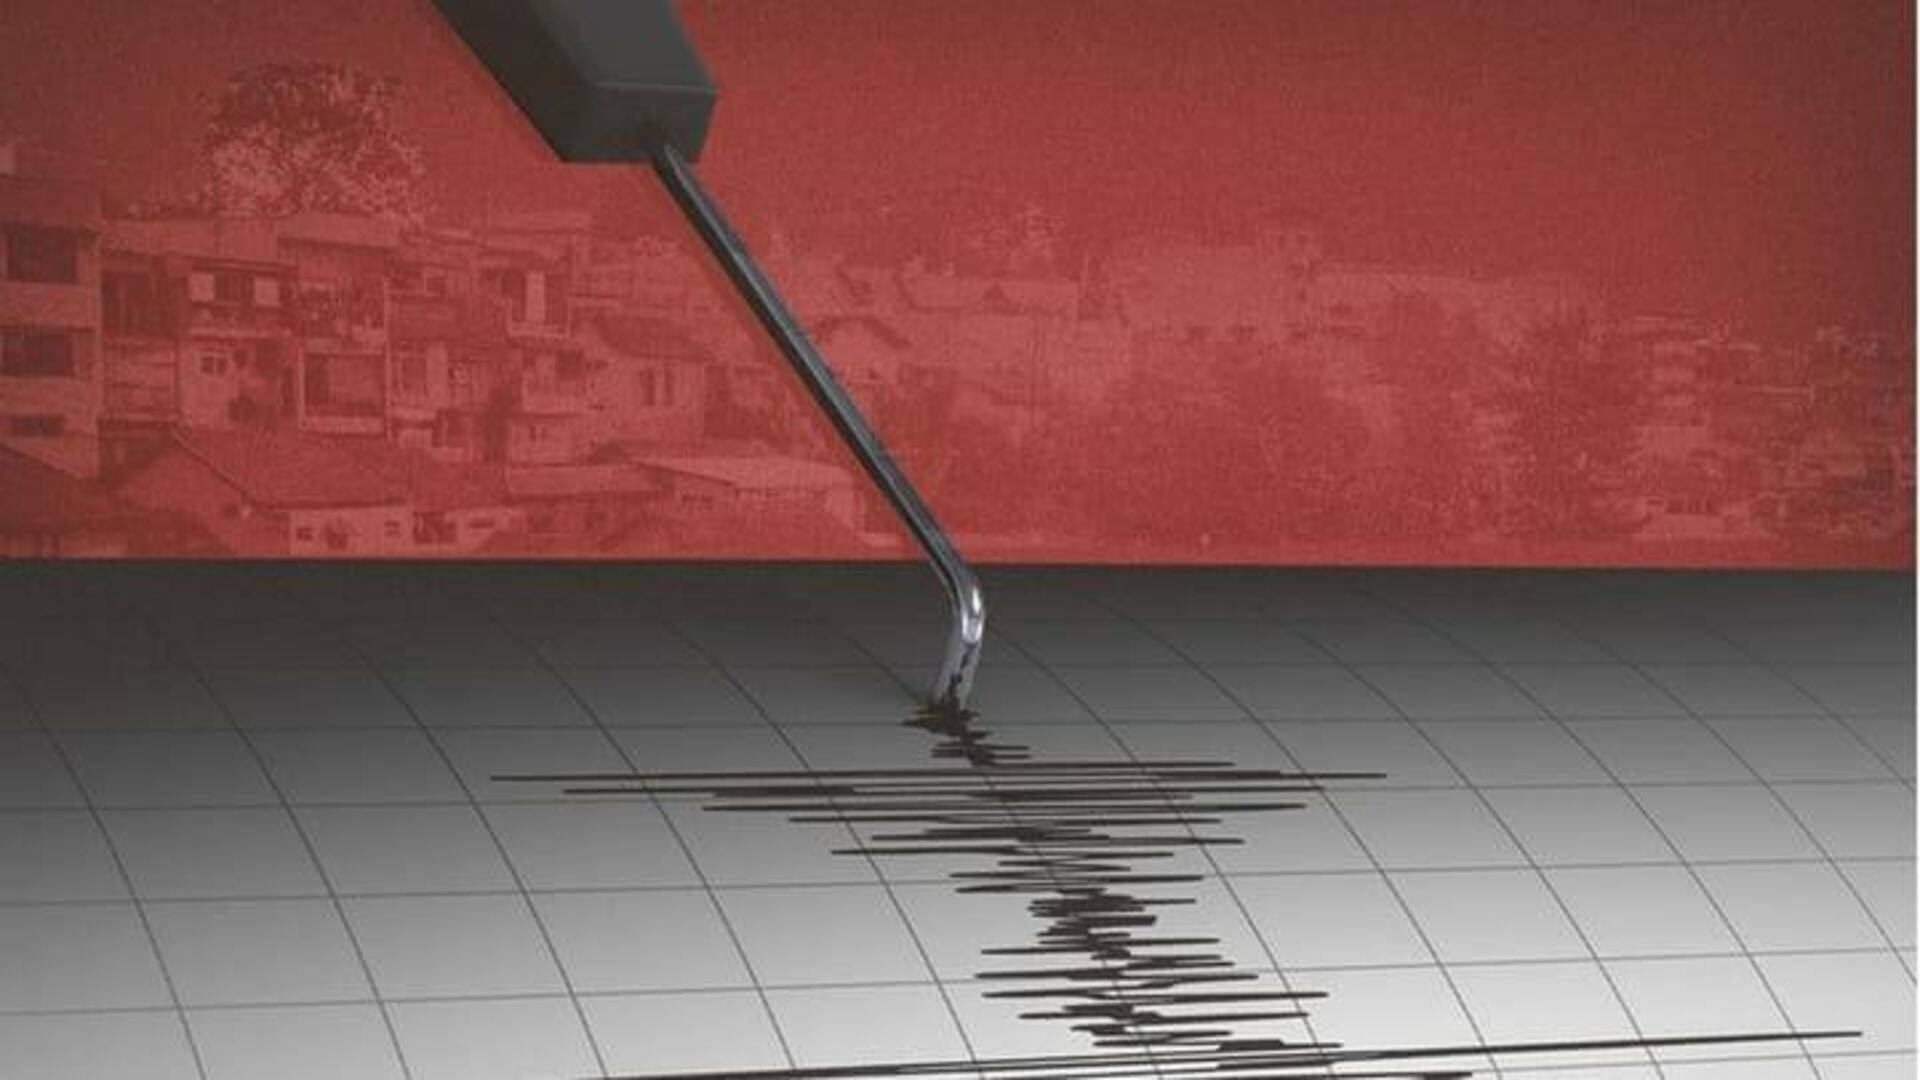 US Earthquake: అలస్కా ద్వీపకల్ప ప్రాంతంలో భారీ భూకంపం; సునామీ హెచ్చరికలు జారీ 